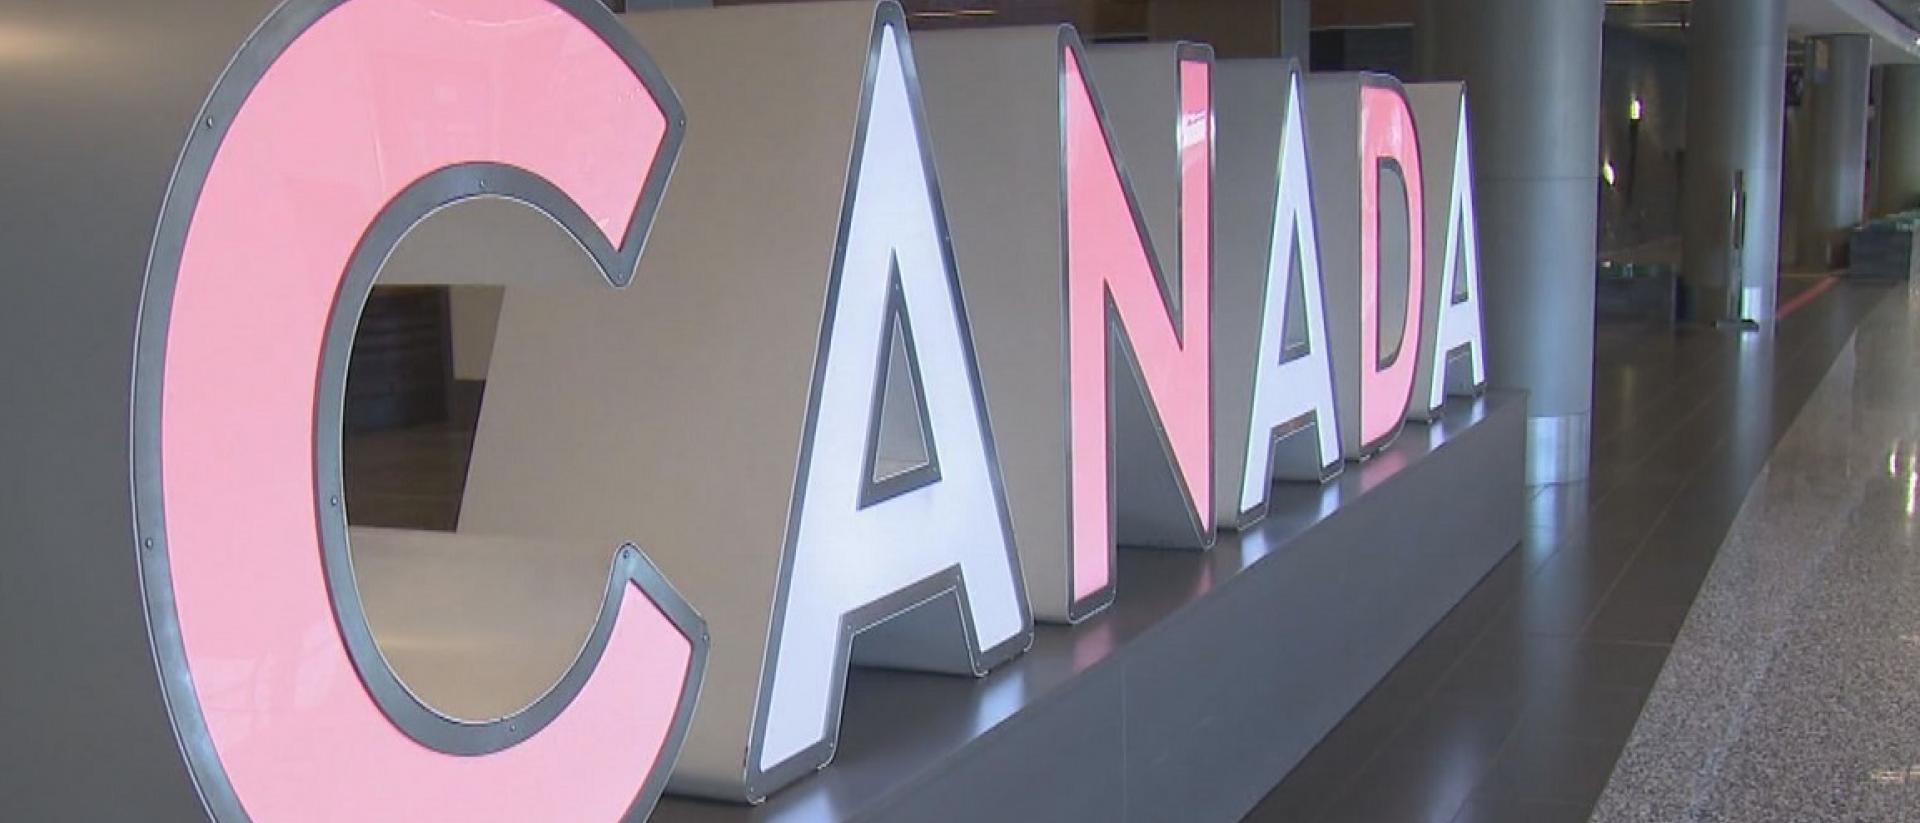 US advises travelers to avoid Canada